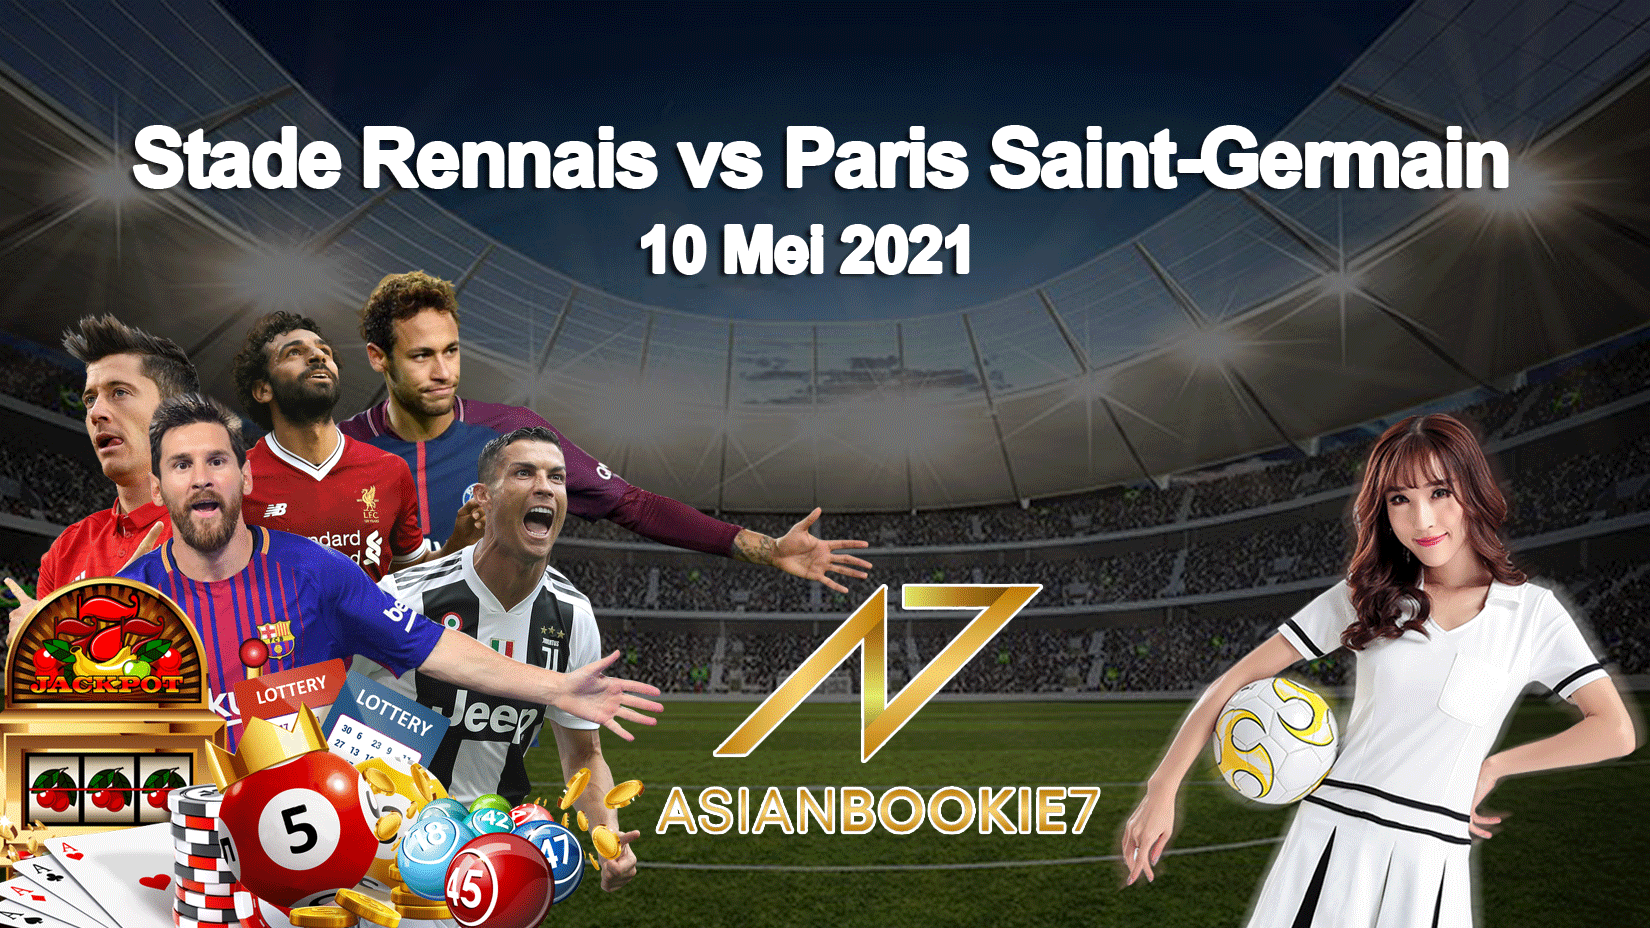 Prediksi Stade Rennais vs Paris Saint-Germain 10 Mei 2021